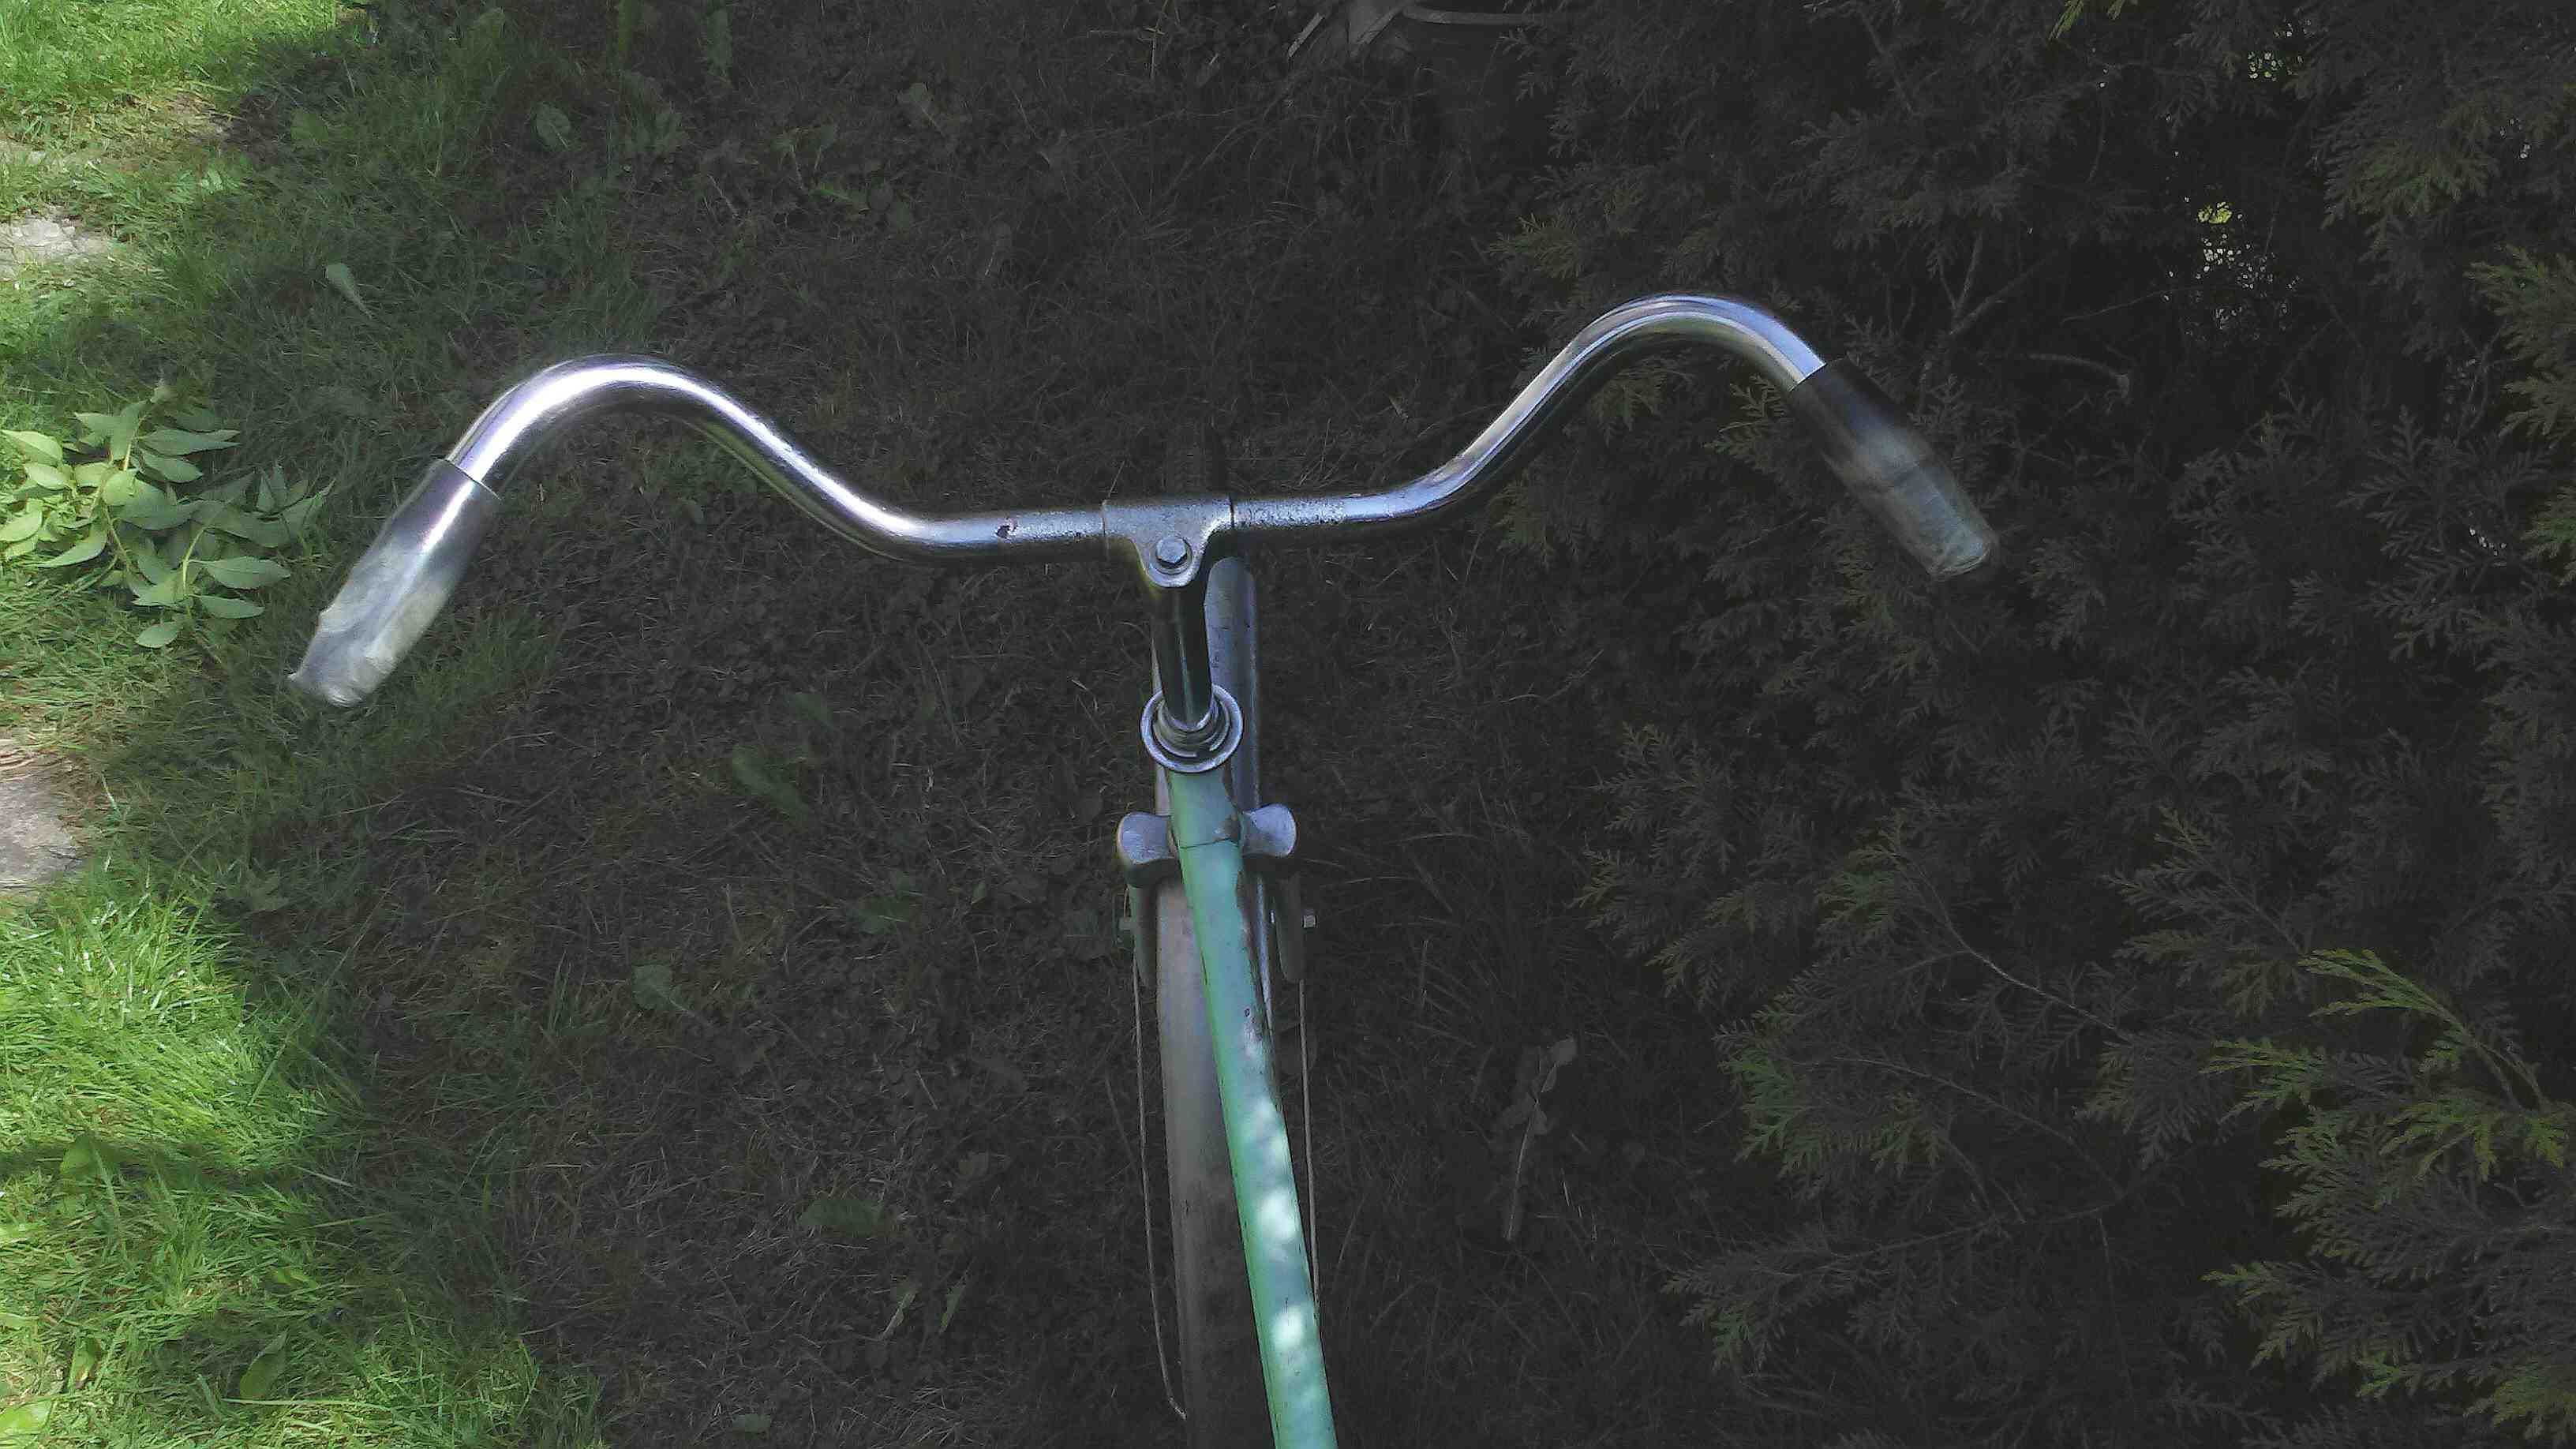 Stary oldskulowy rower damka z lat 60-70    2  hulajnogi  gratis!